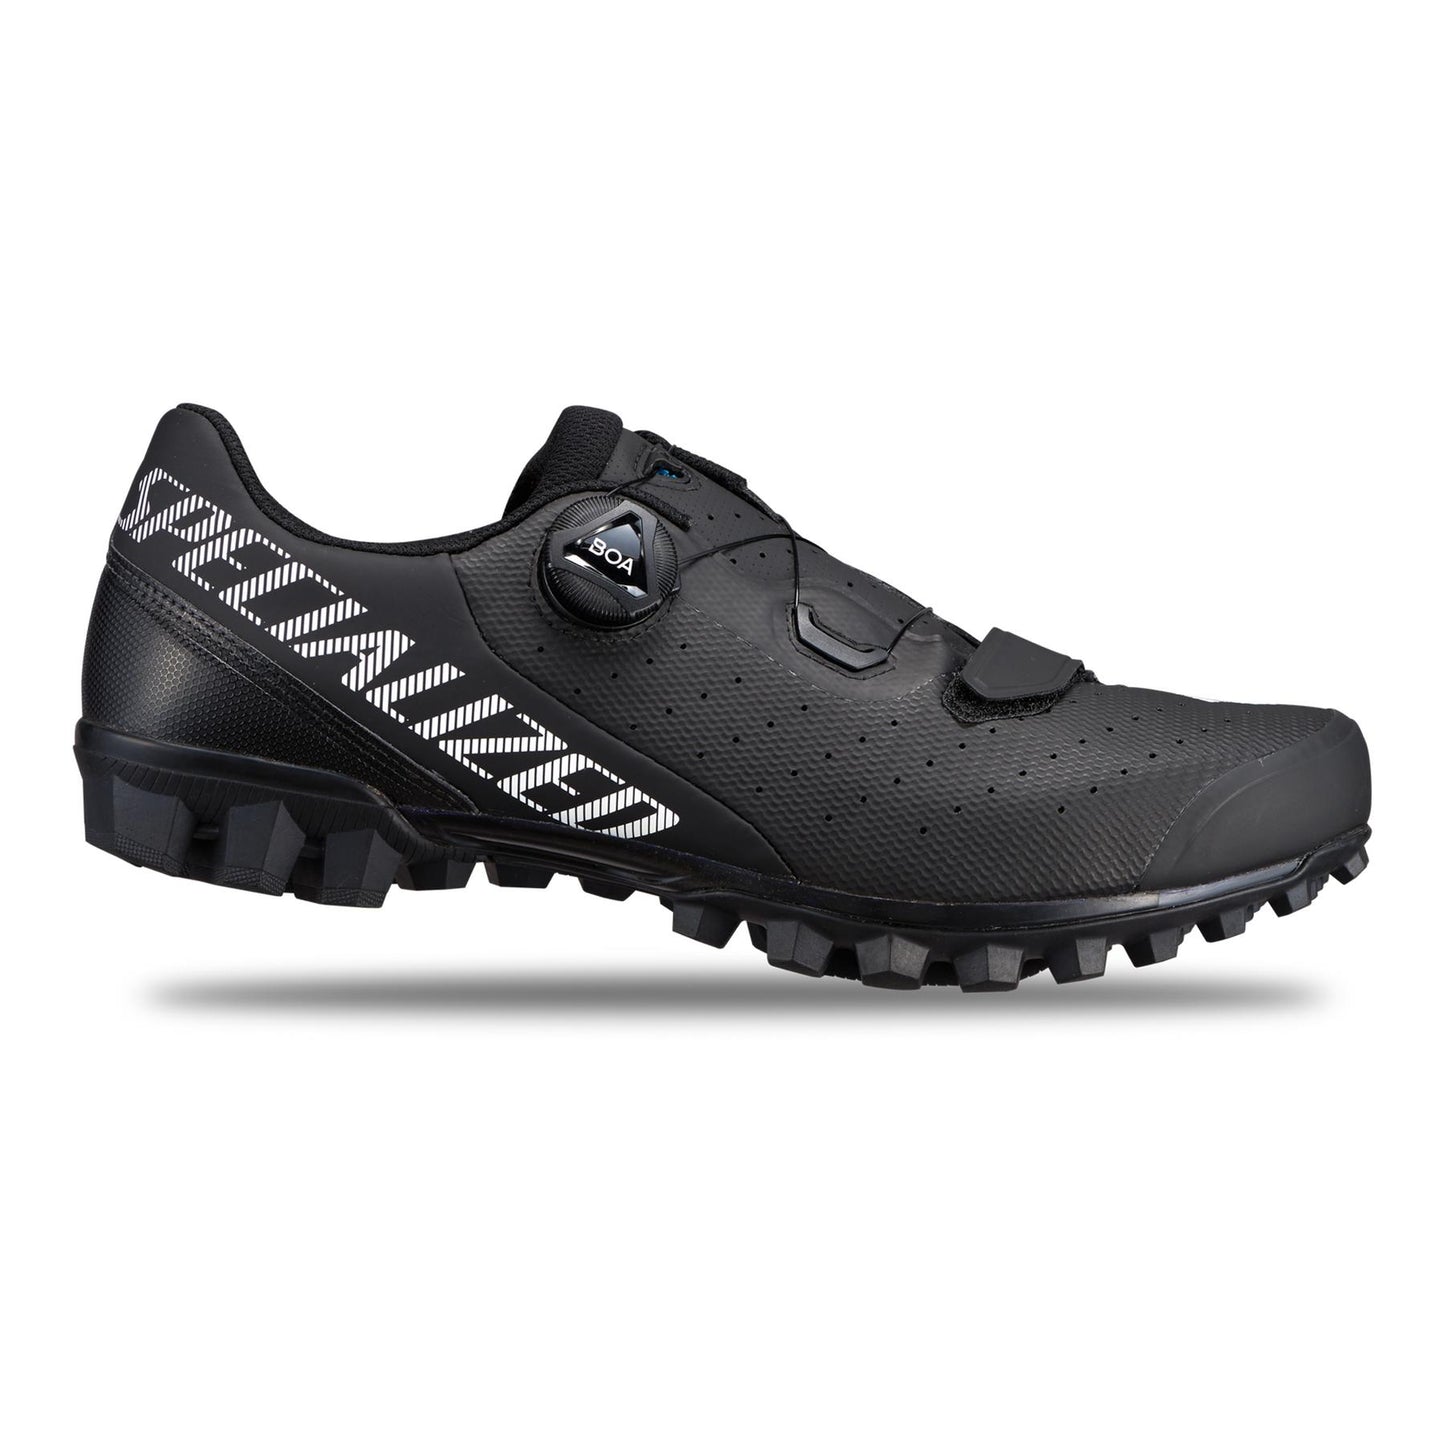 Recon 2.0 Mountain Bike Shoes in Black